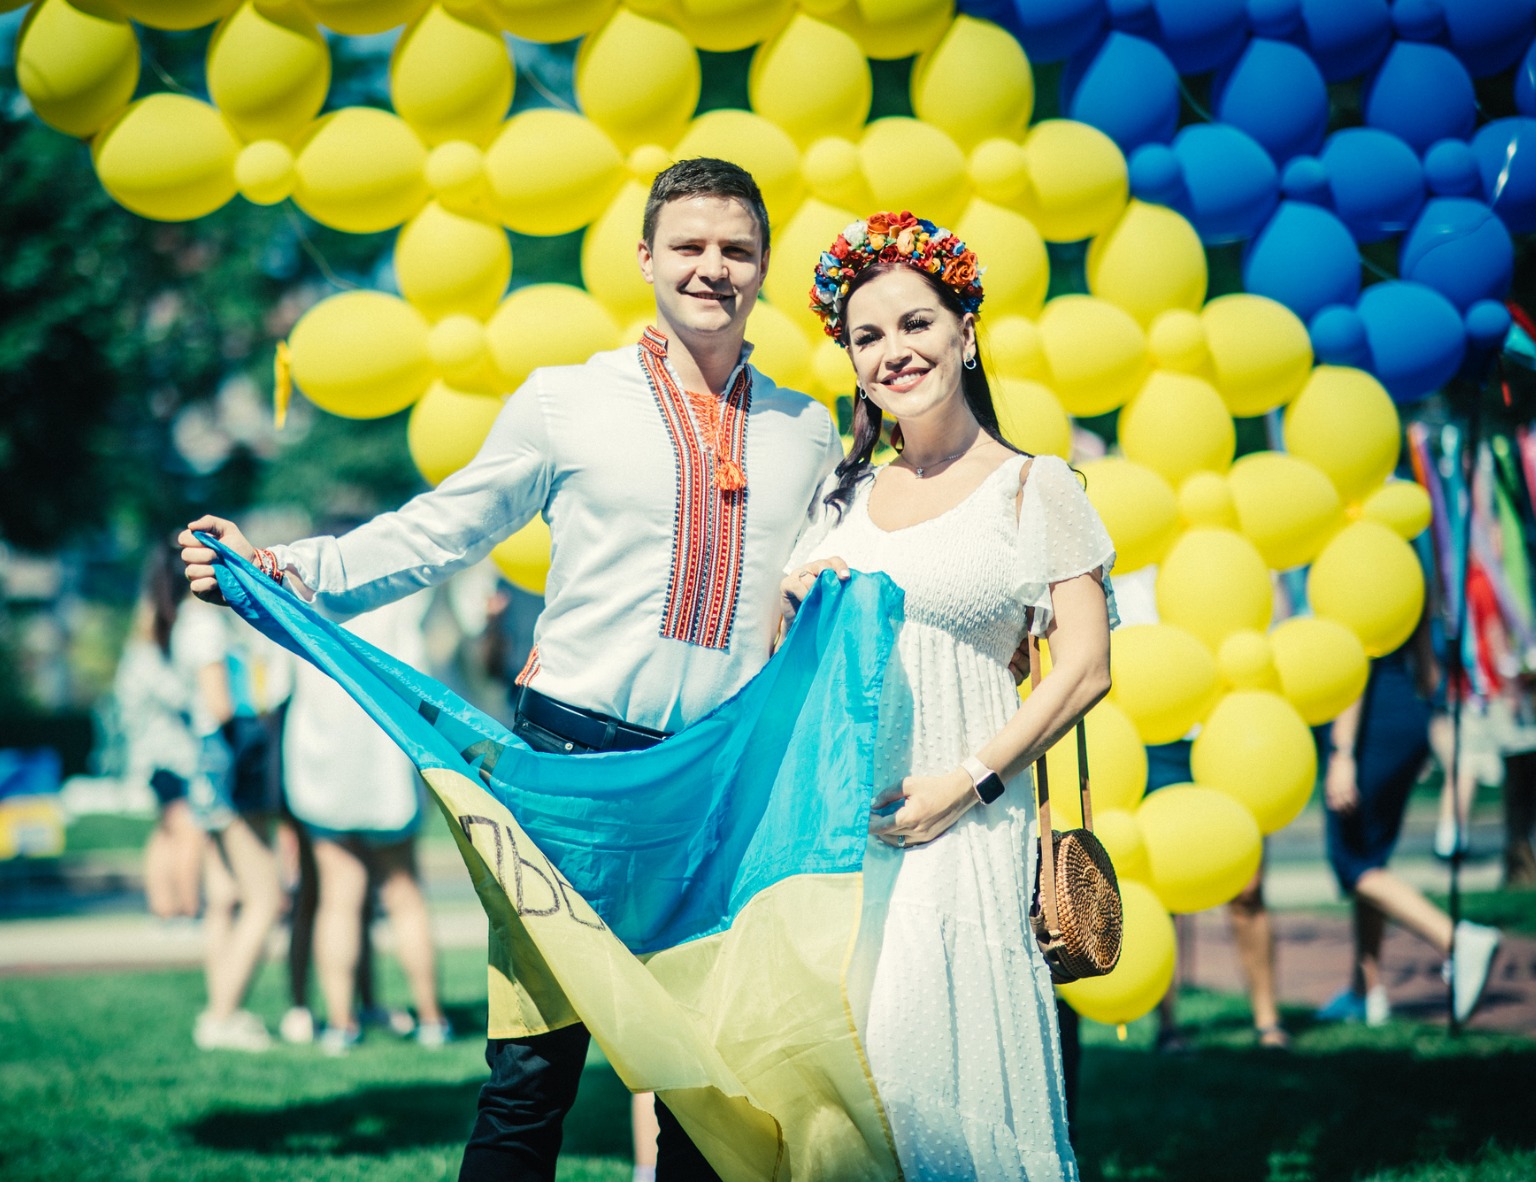 Boston Annual Ukrainian Festival & Independence Day